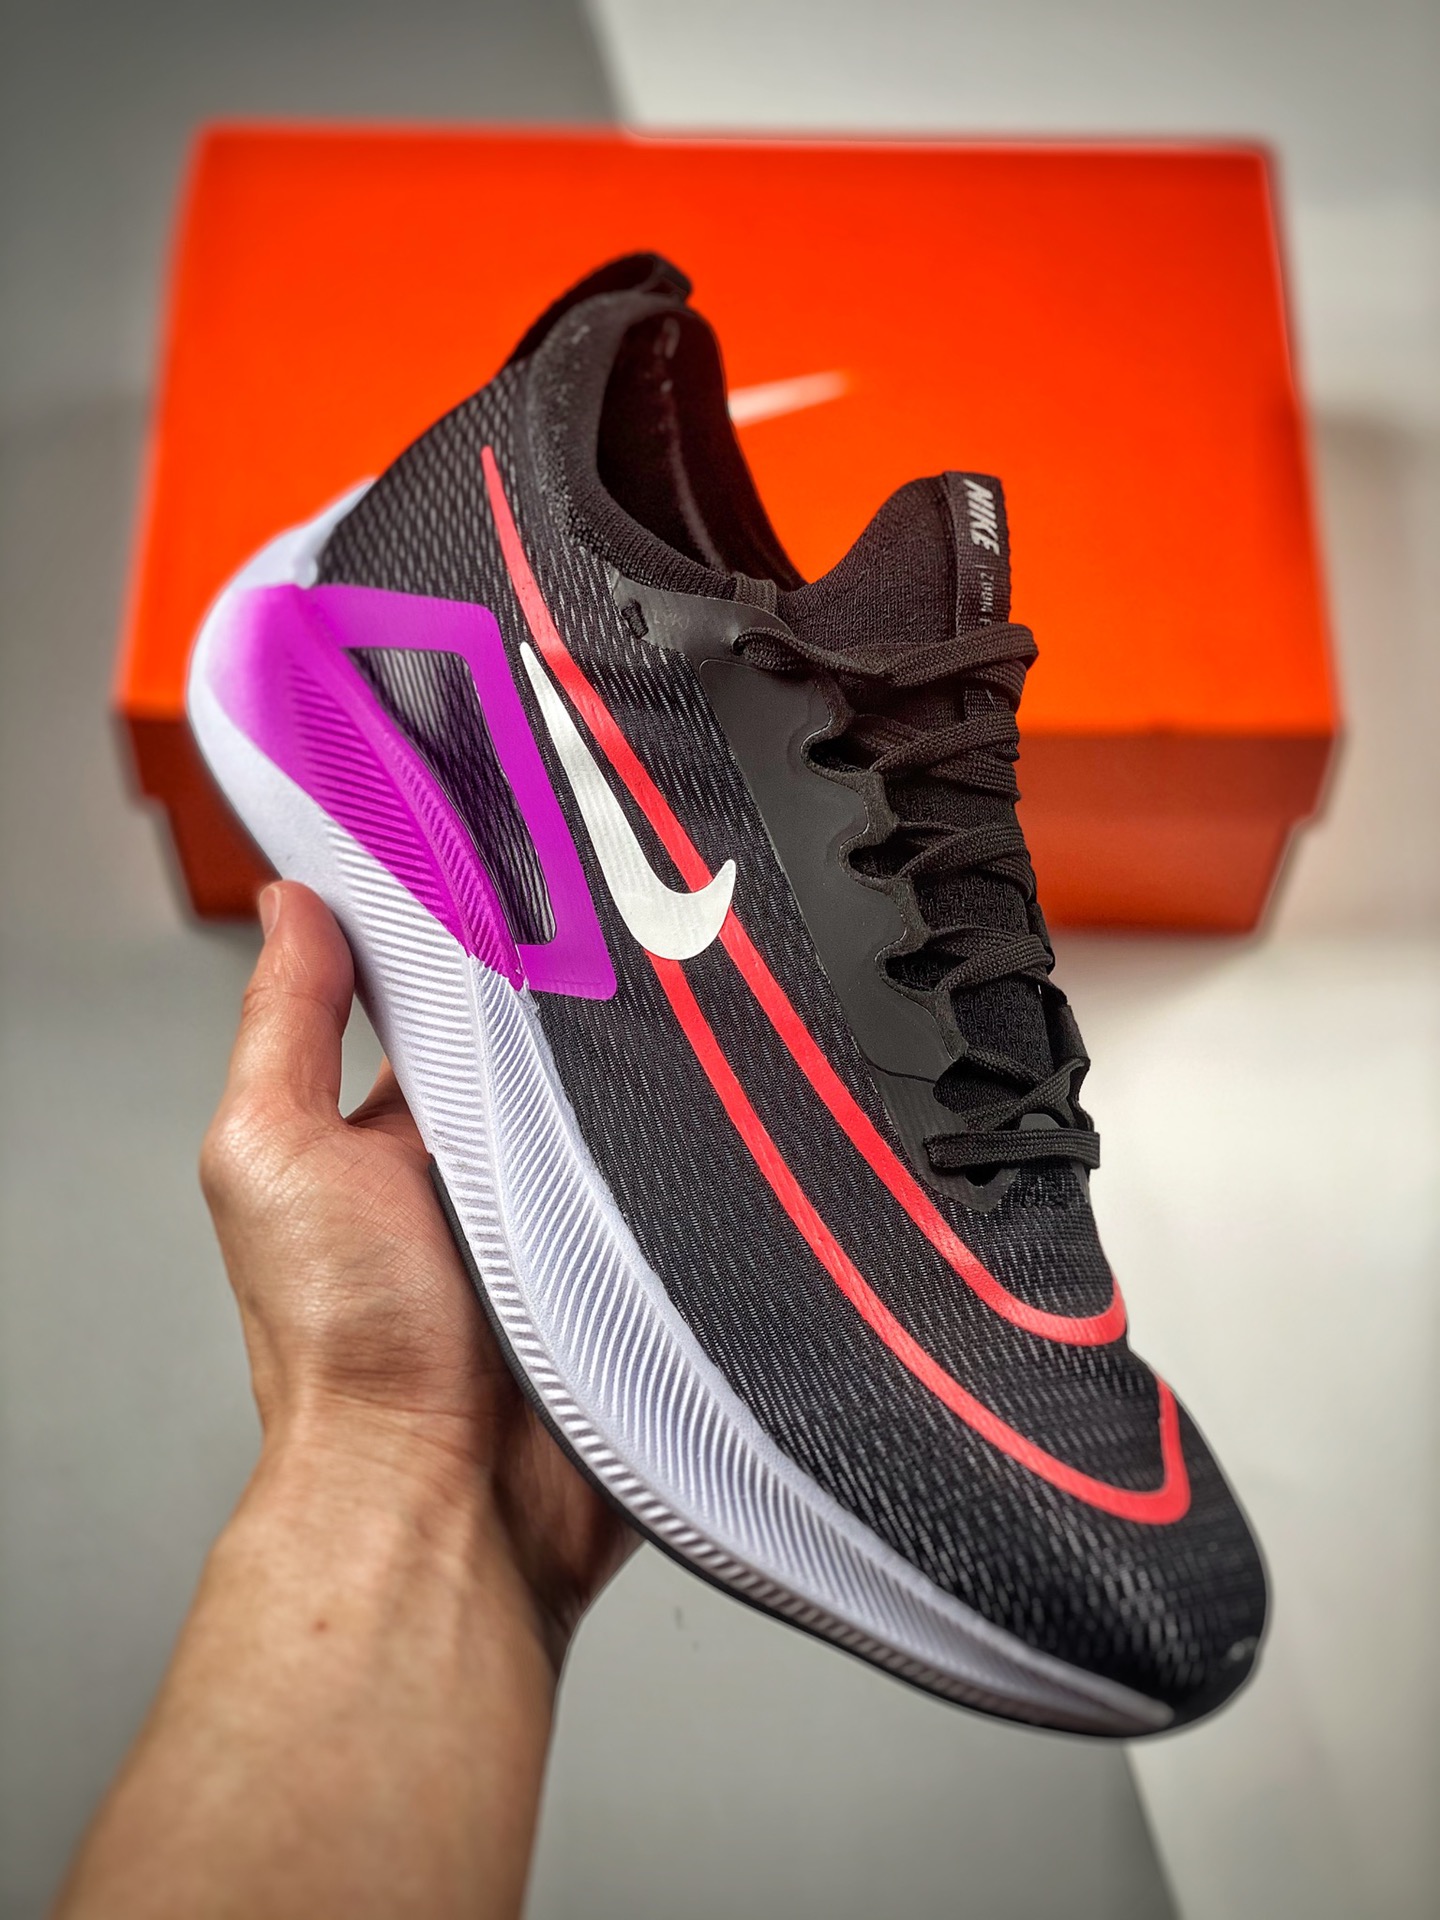 Nike Zoom Fly 4 "Black/Anthracite/Hyper Violet" Shoes